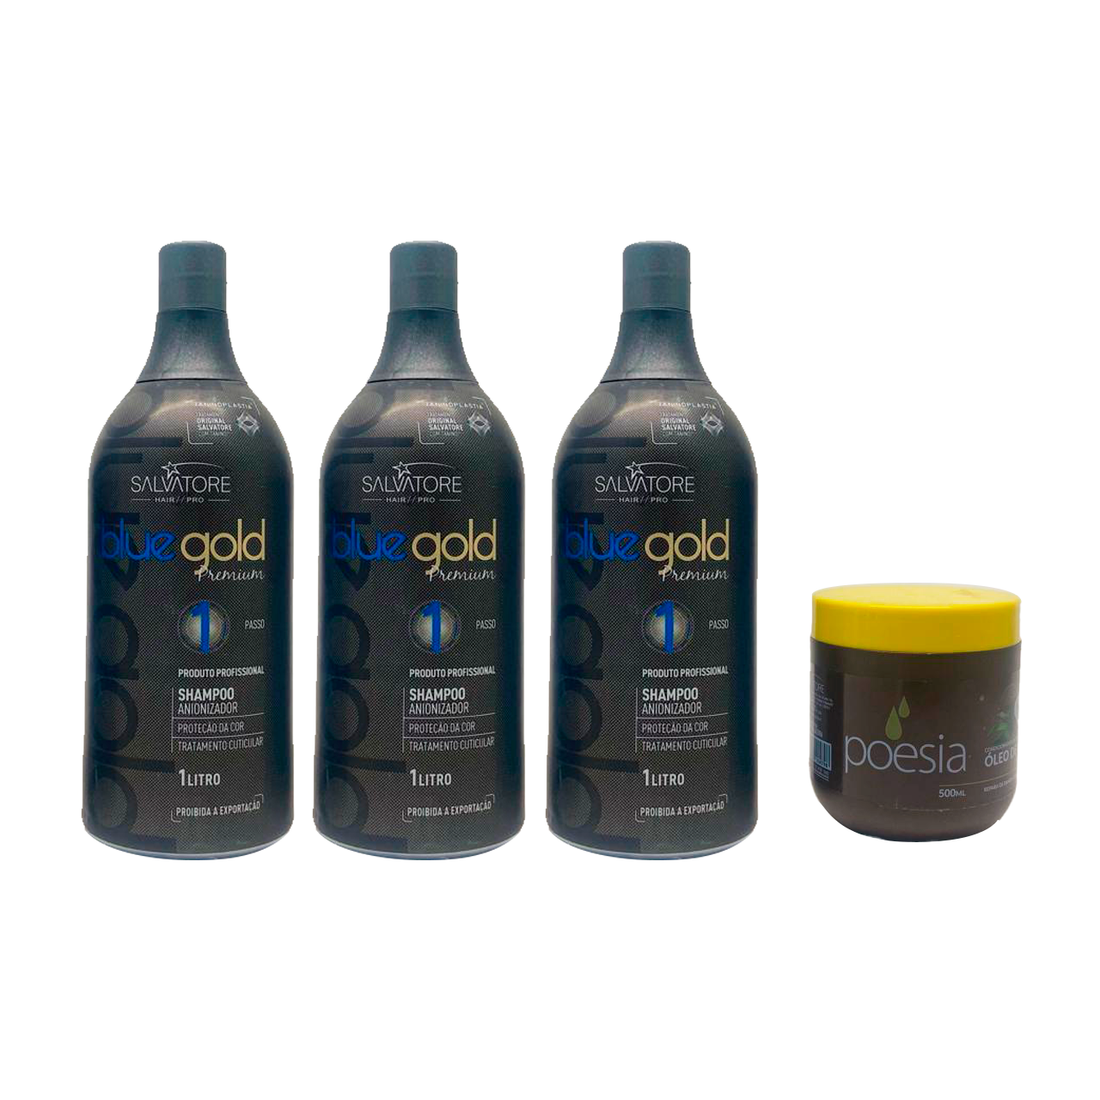 Salvatore, Blue Gold, Deep Cleansing Shampoo For Hair, 3x1L + Poesia Oleo de Coco, Hair Mask, 500g